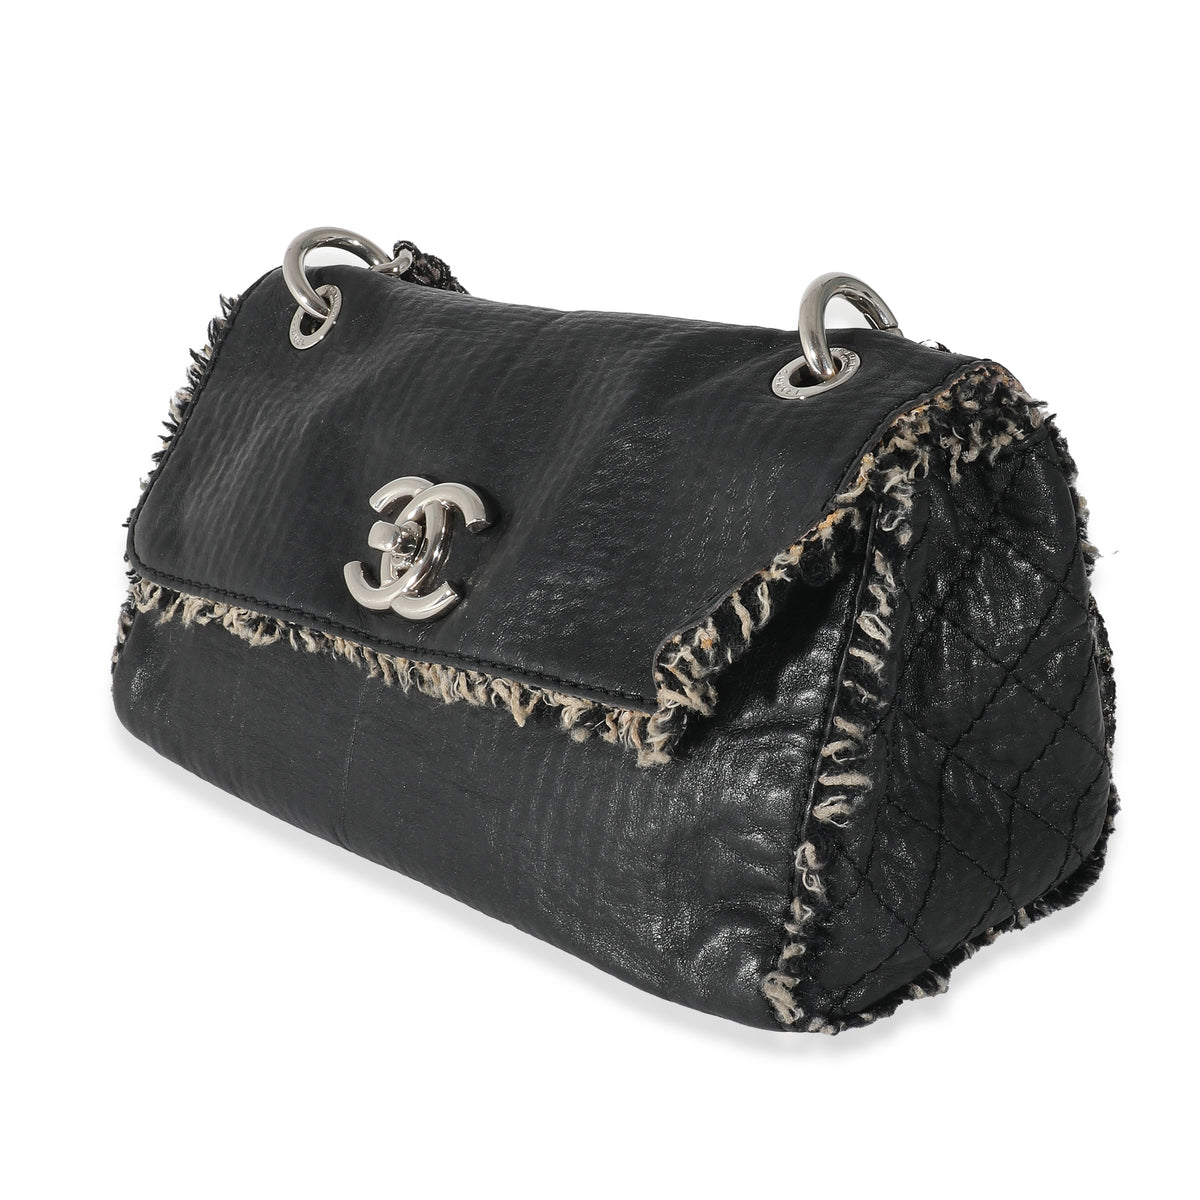 Chanel Black Leather Tweed Fringe CC Flap Bag